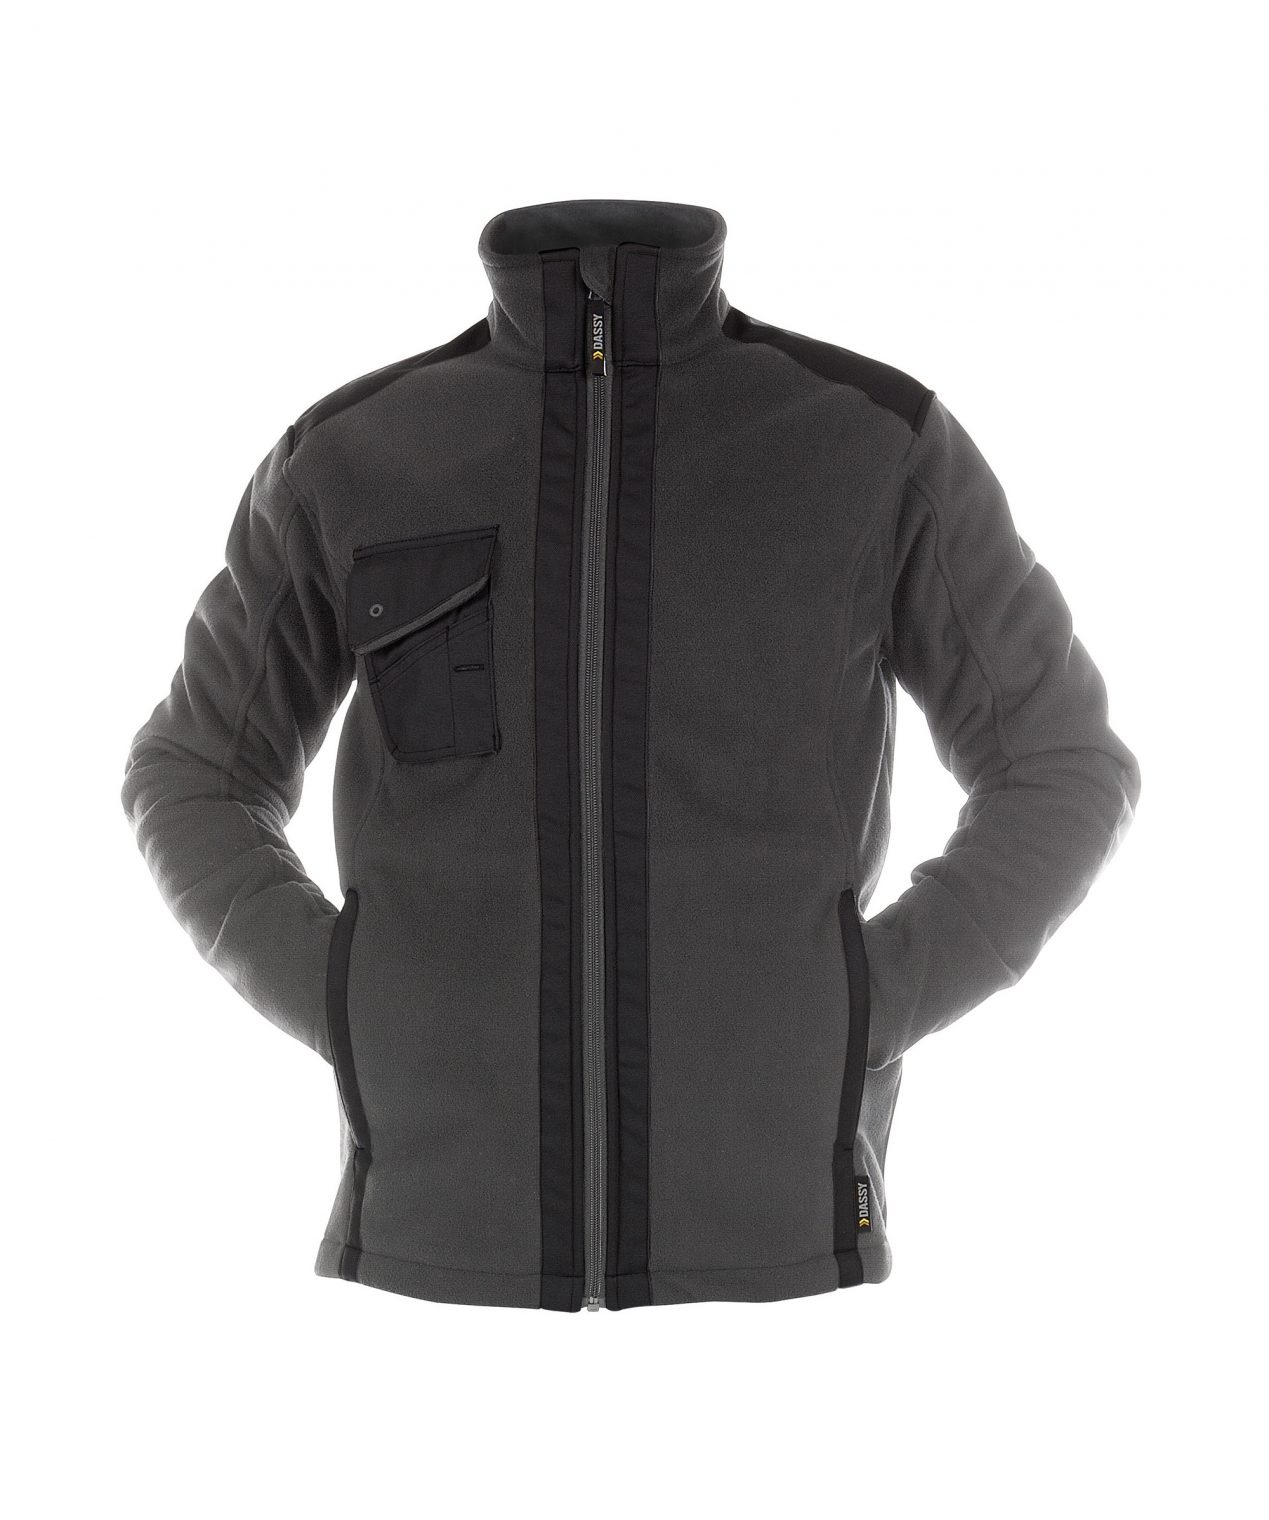 croft three layered fleece jacket anthracite grey black front